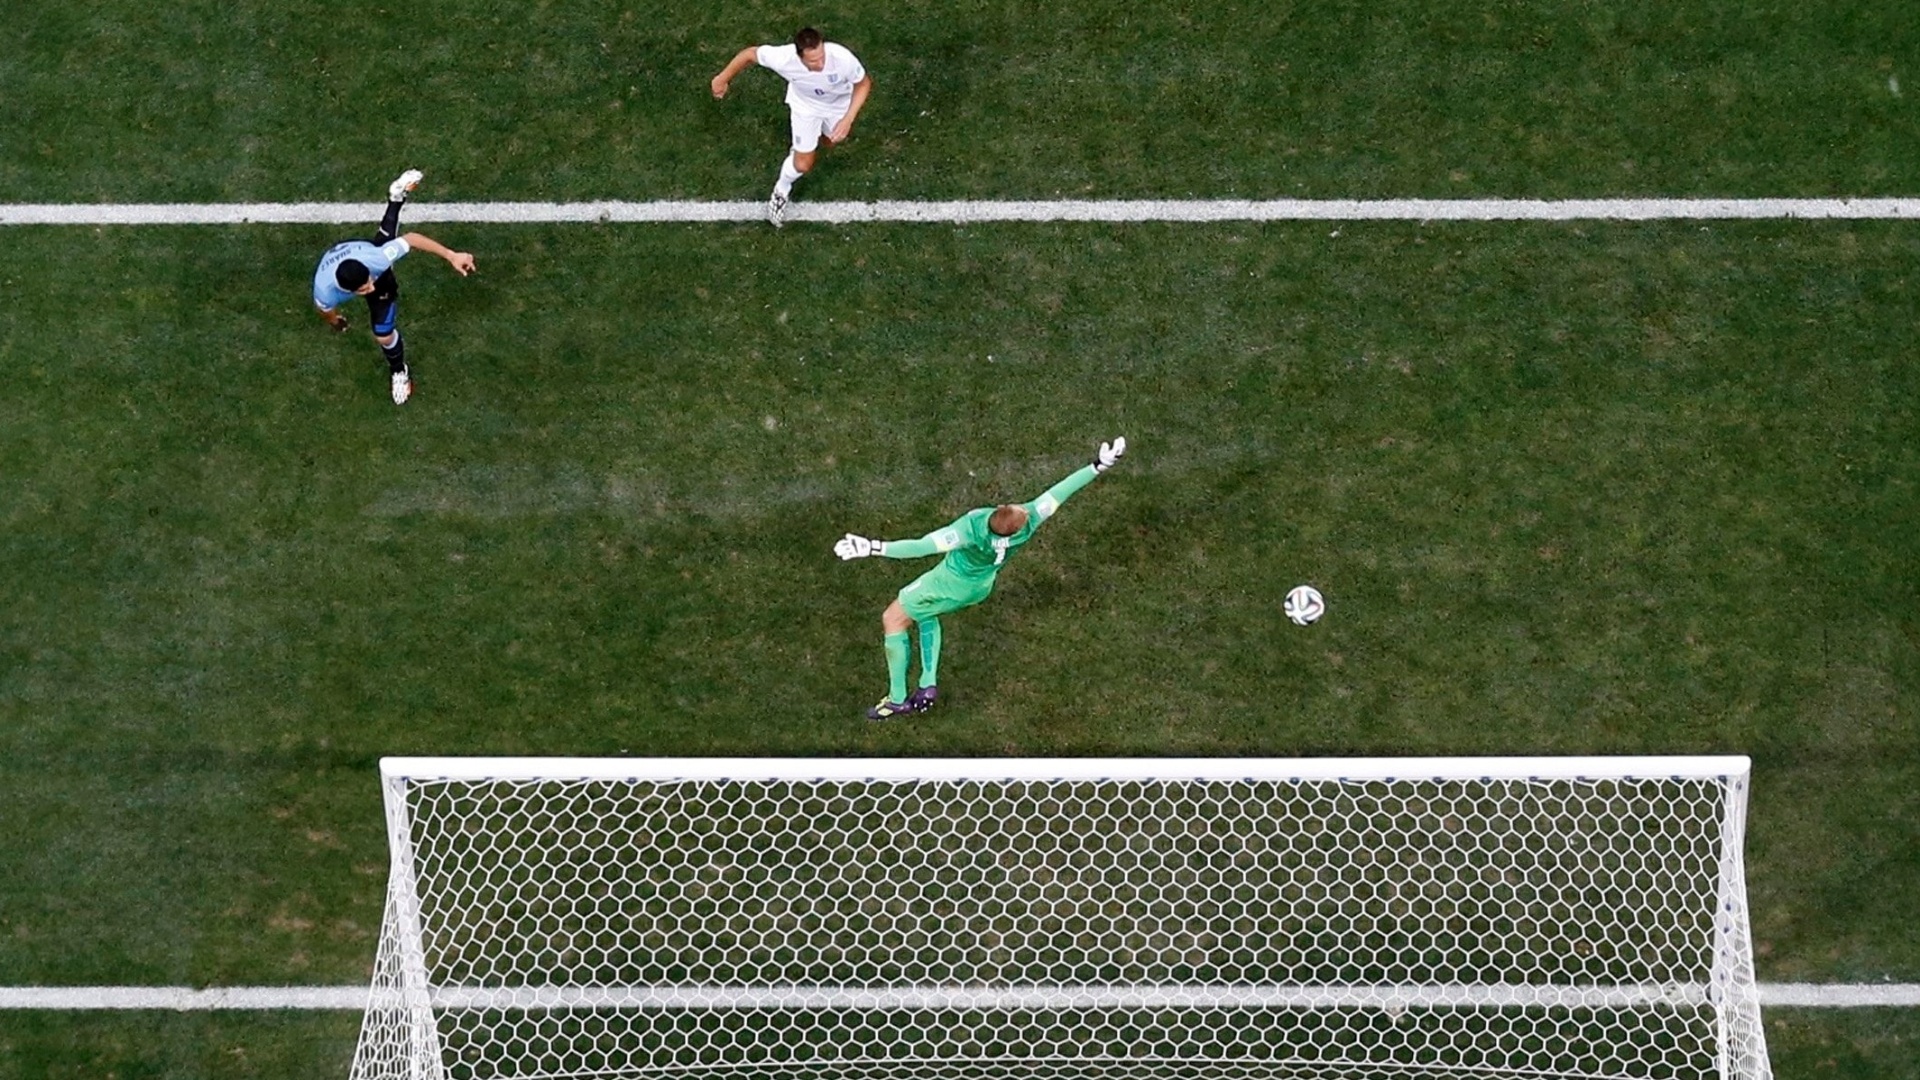 19.jun.2014 - Gol do Uruguai visto do alto. Uruguaio Suárez desloca o goleiro Joe Hart e marca o primeiro gol da partida